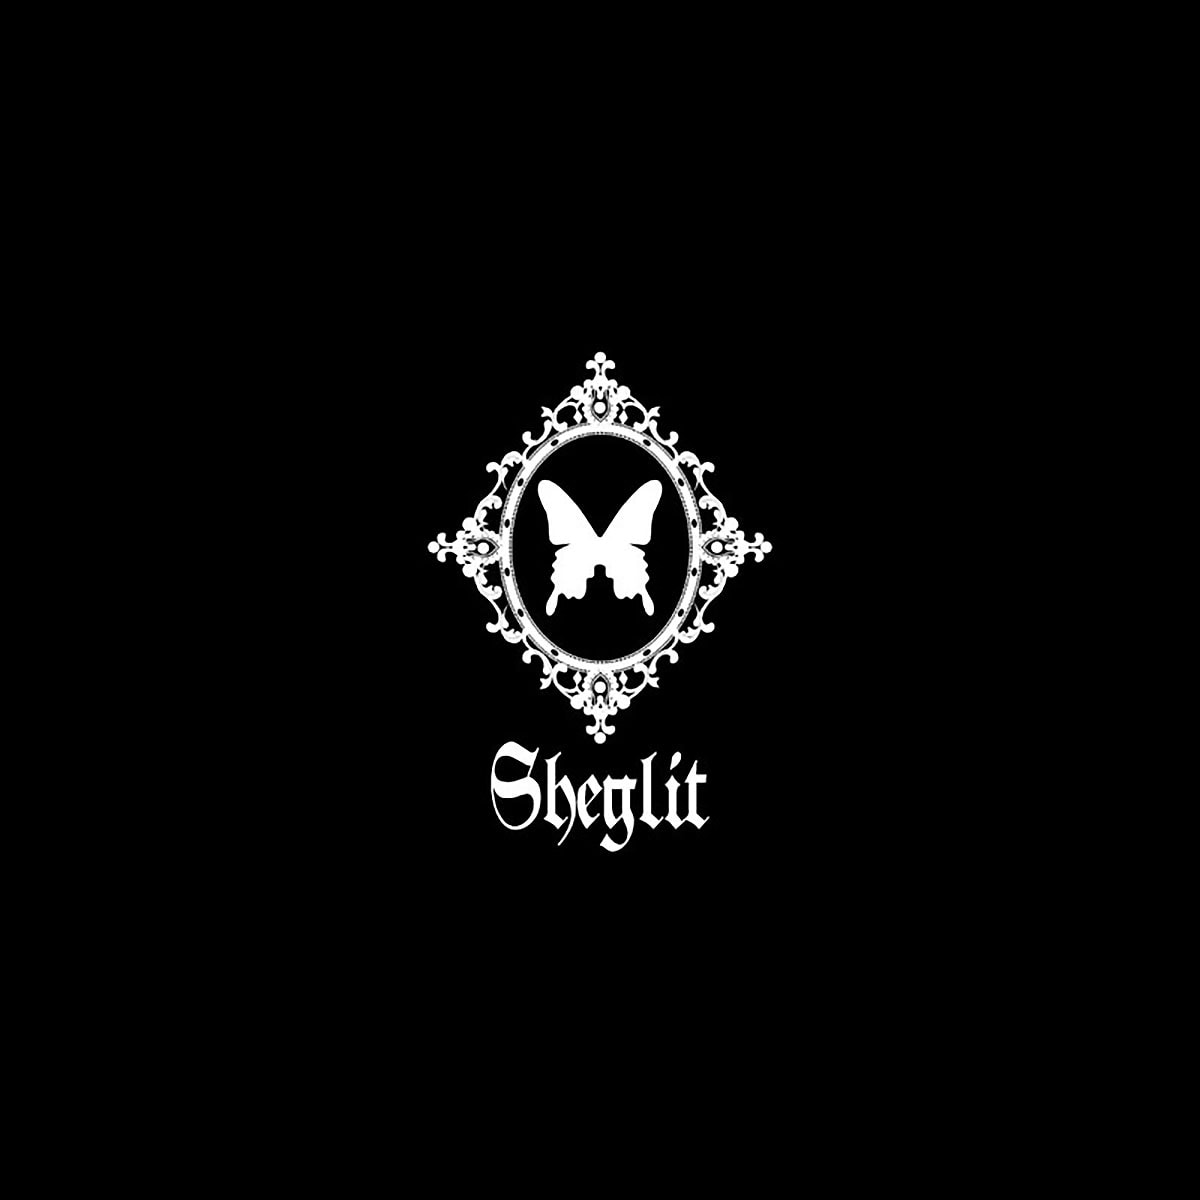 Sheglit: Brand History, Style, Where to Buy